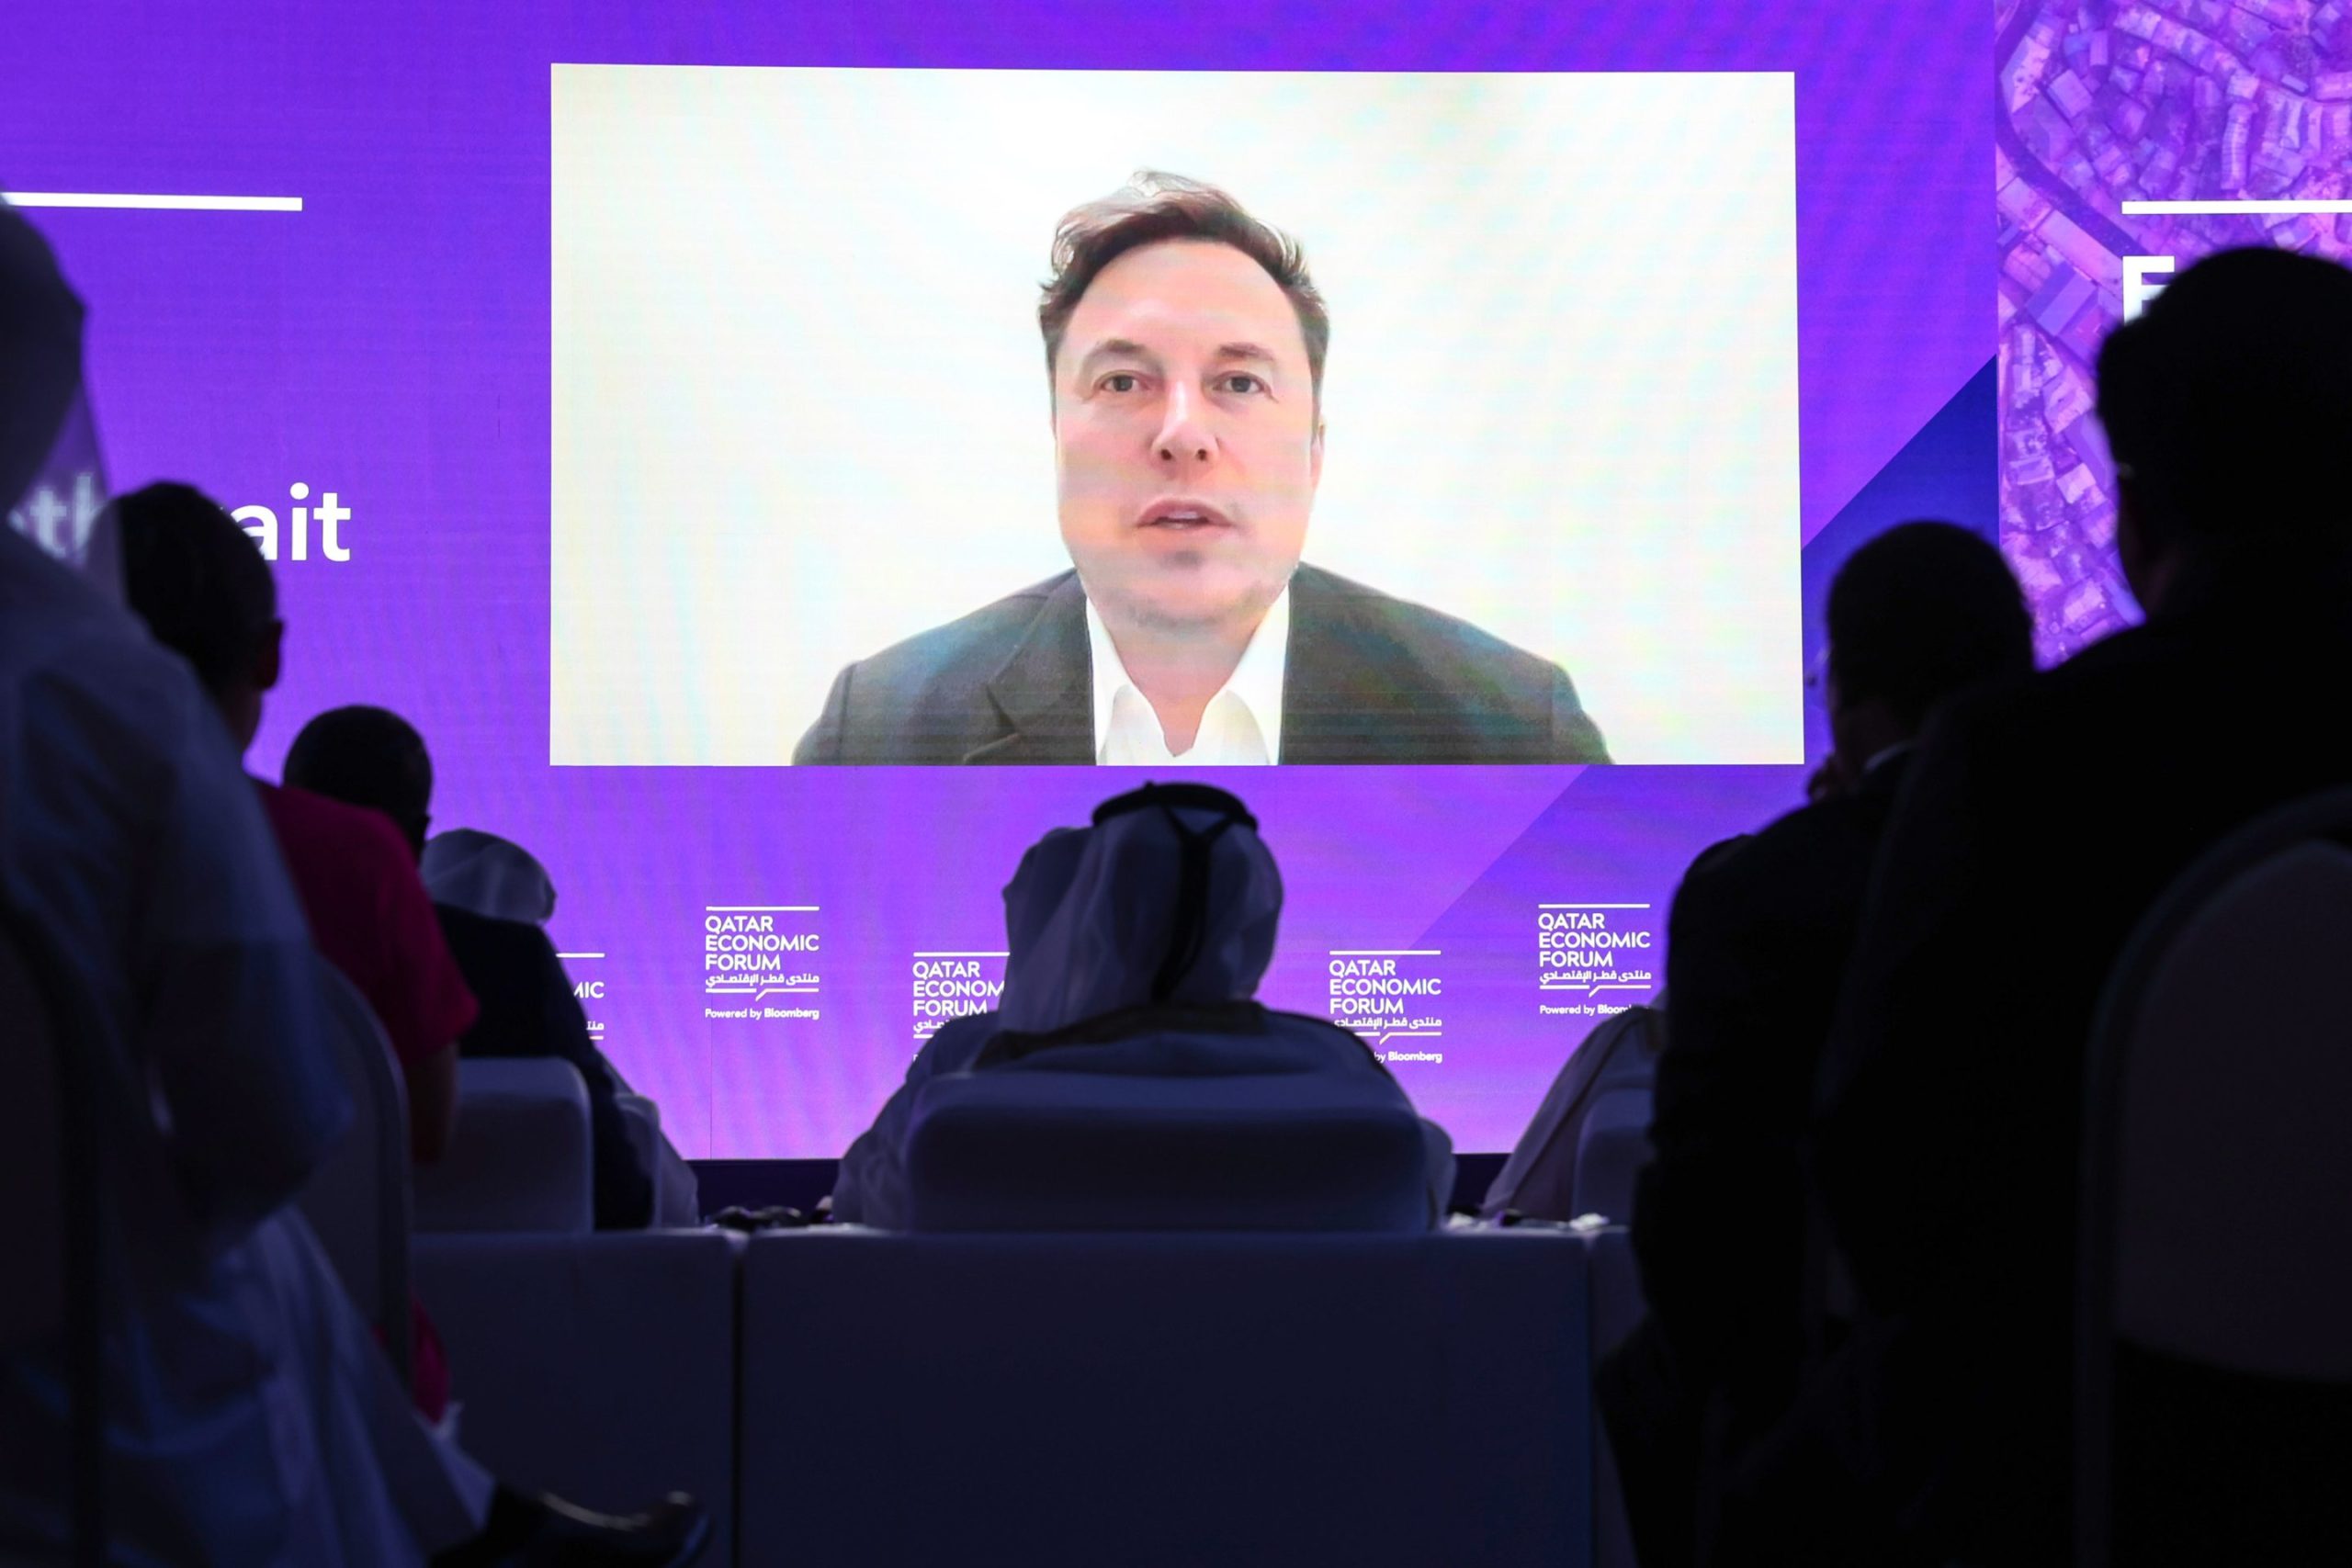 Musk says new Tesla plants are ‘money furnaces’ burning billions of dollars